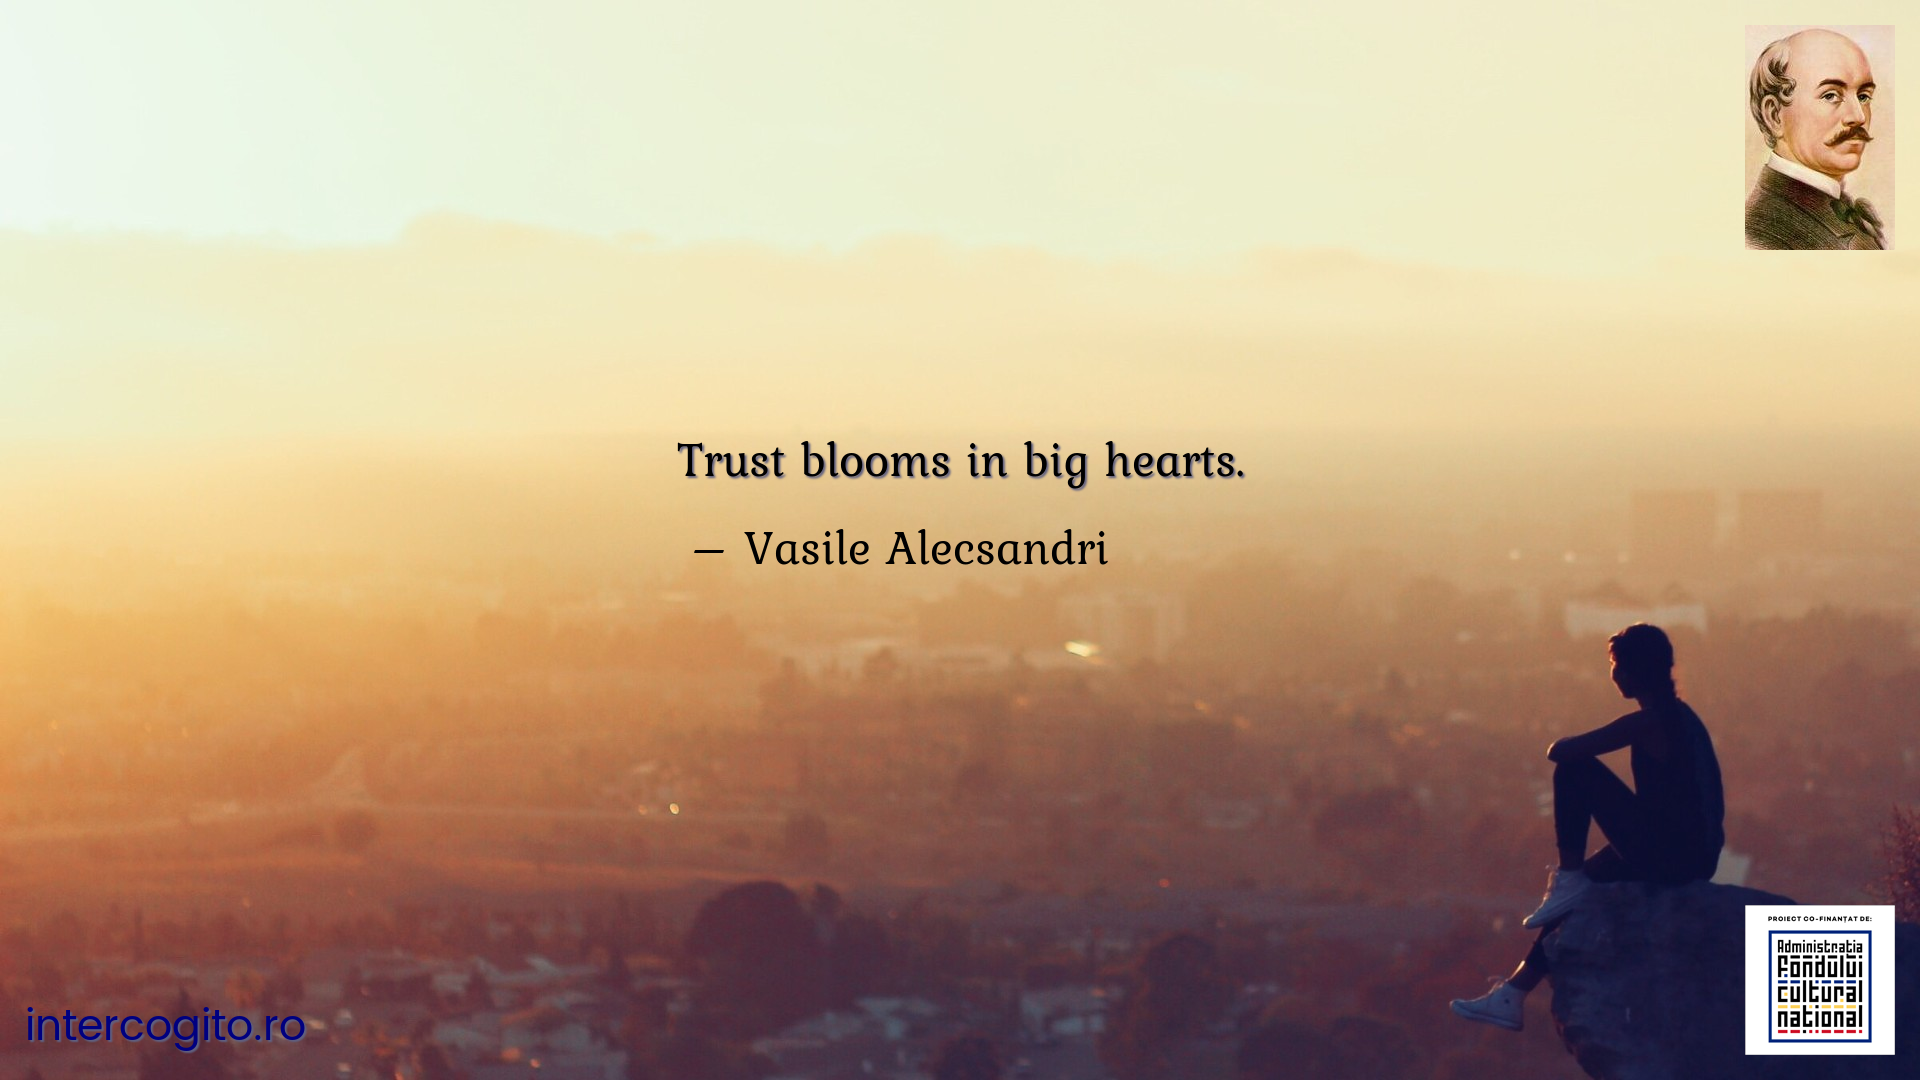 Trust blooms in big hearts.